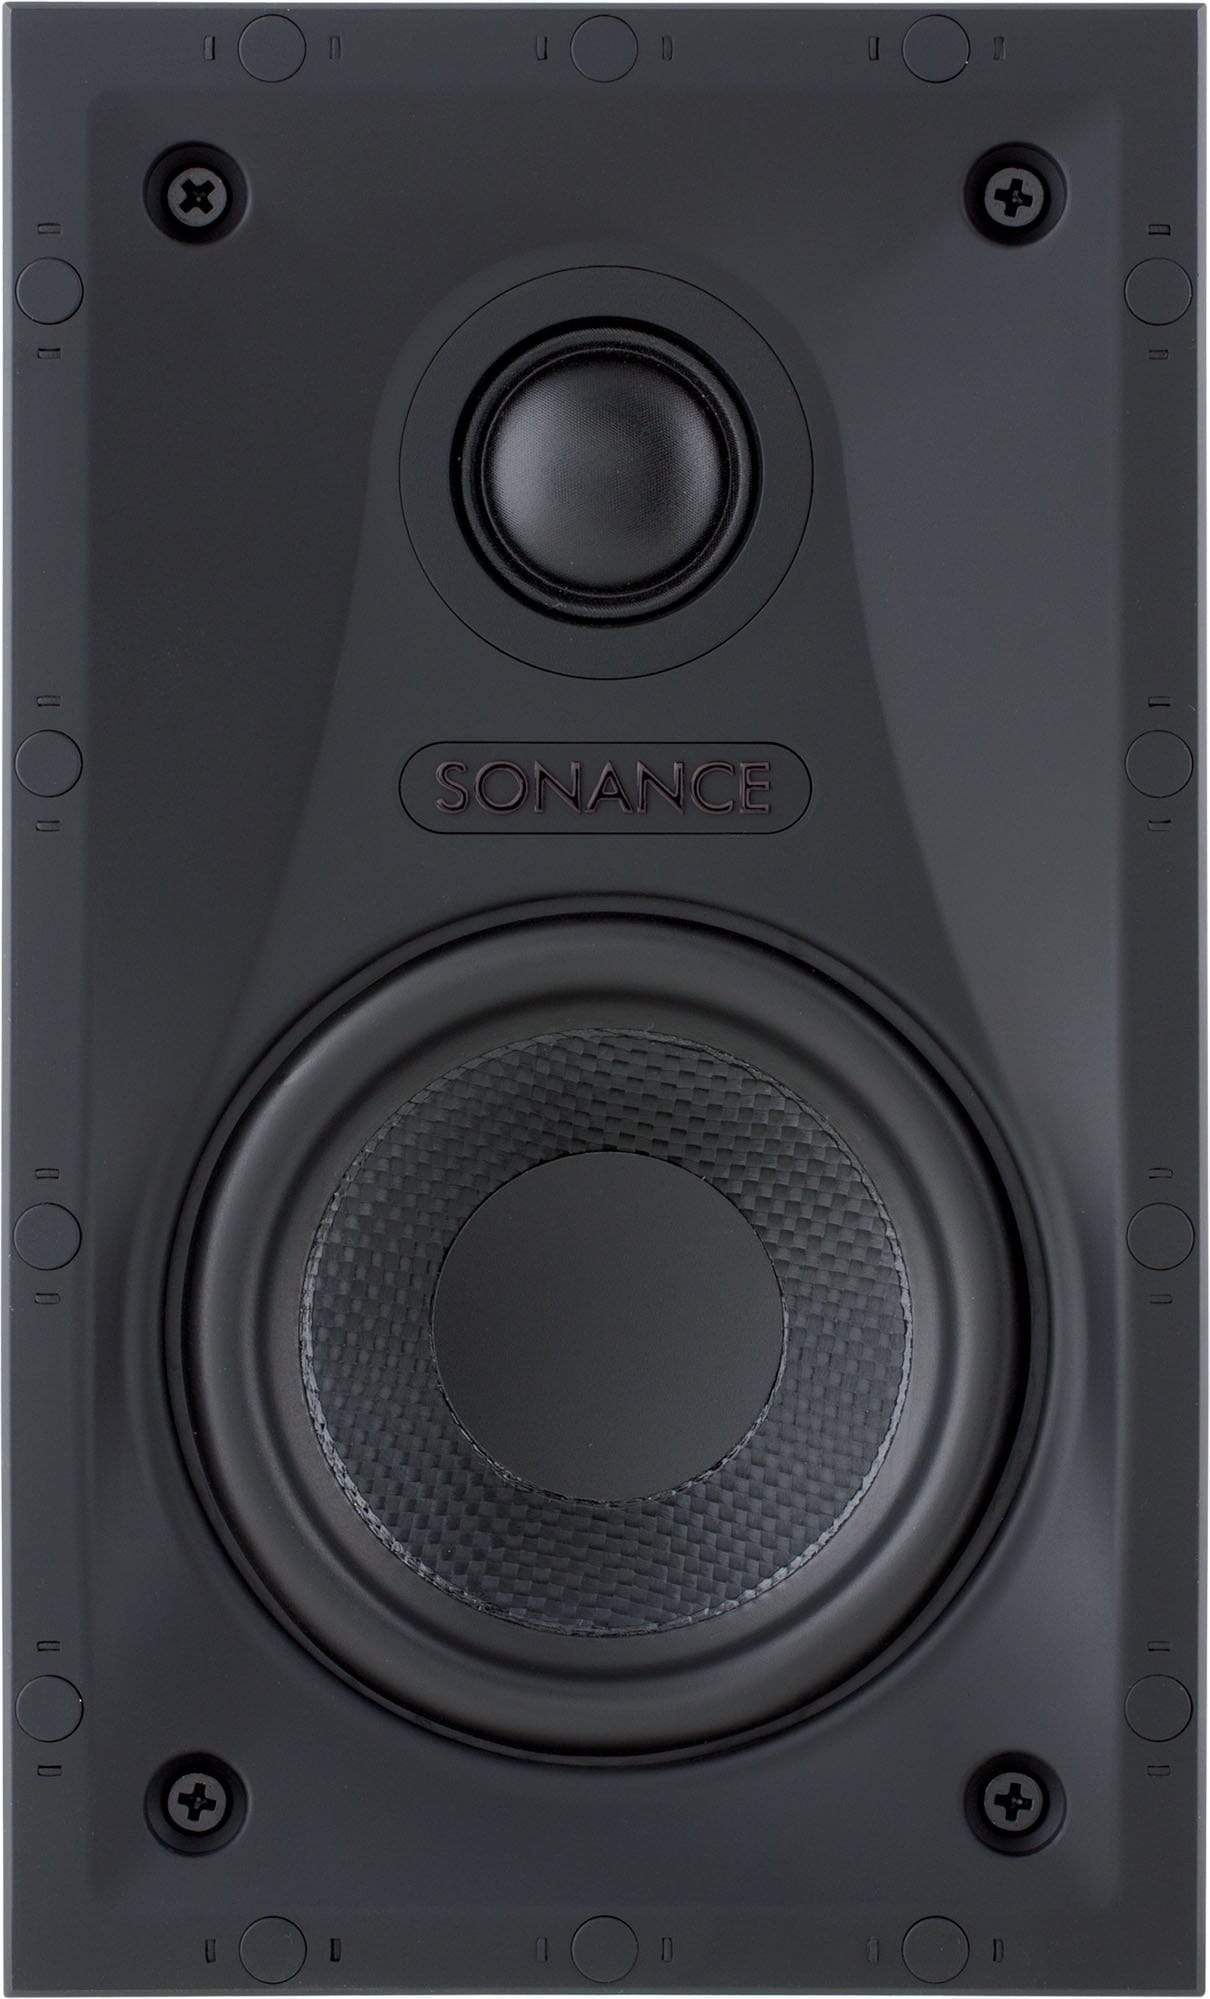 Sonance VP42 In-wall Speakers